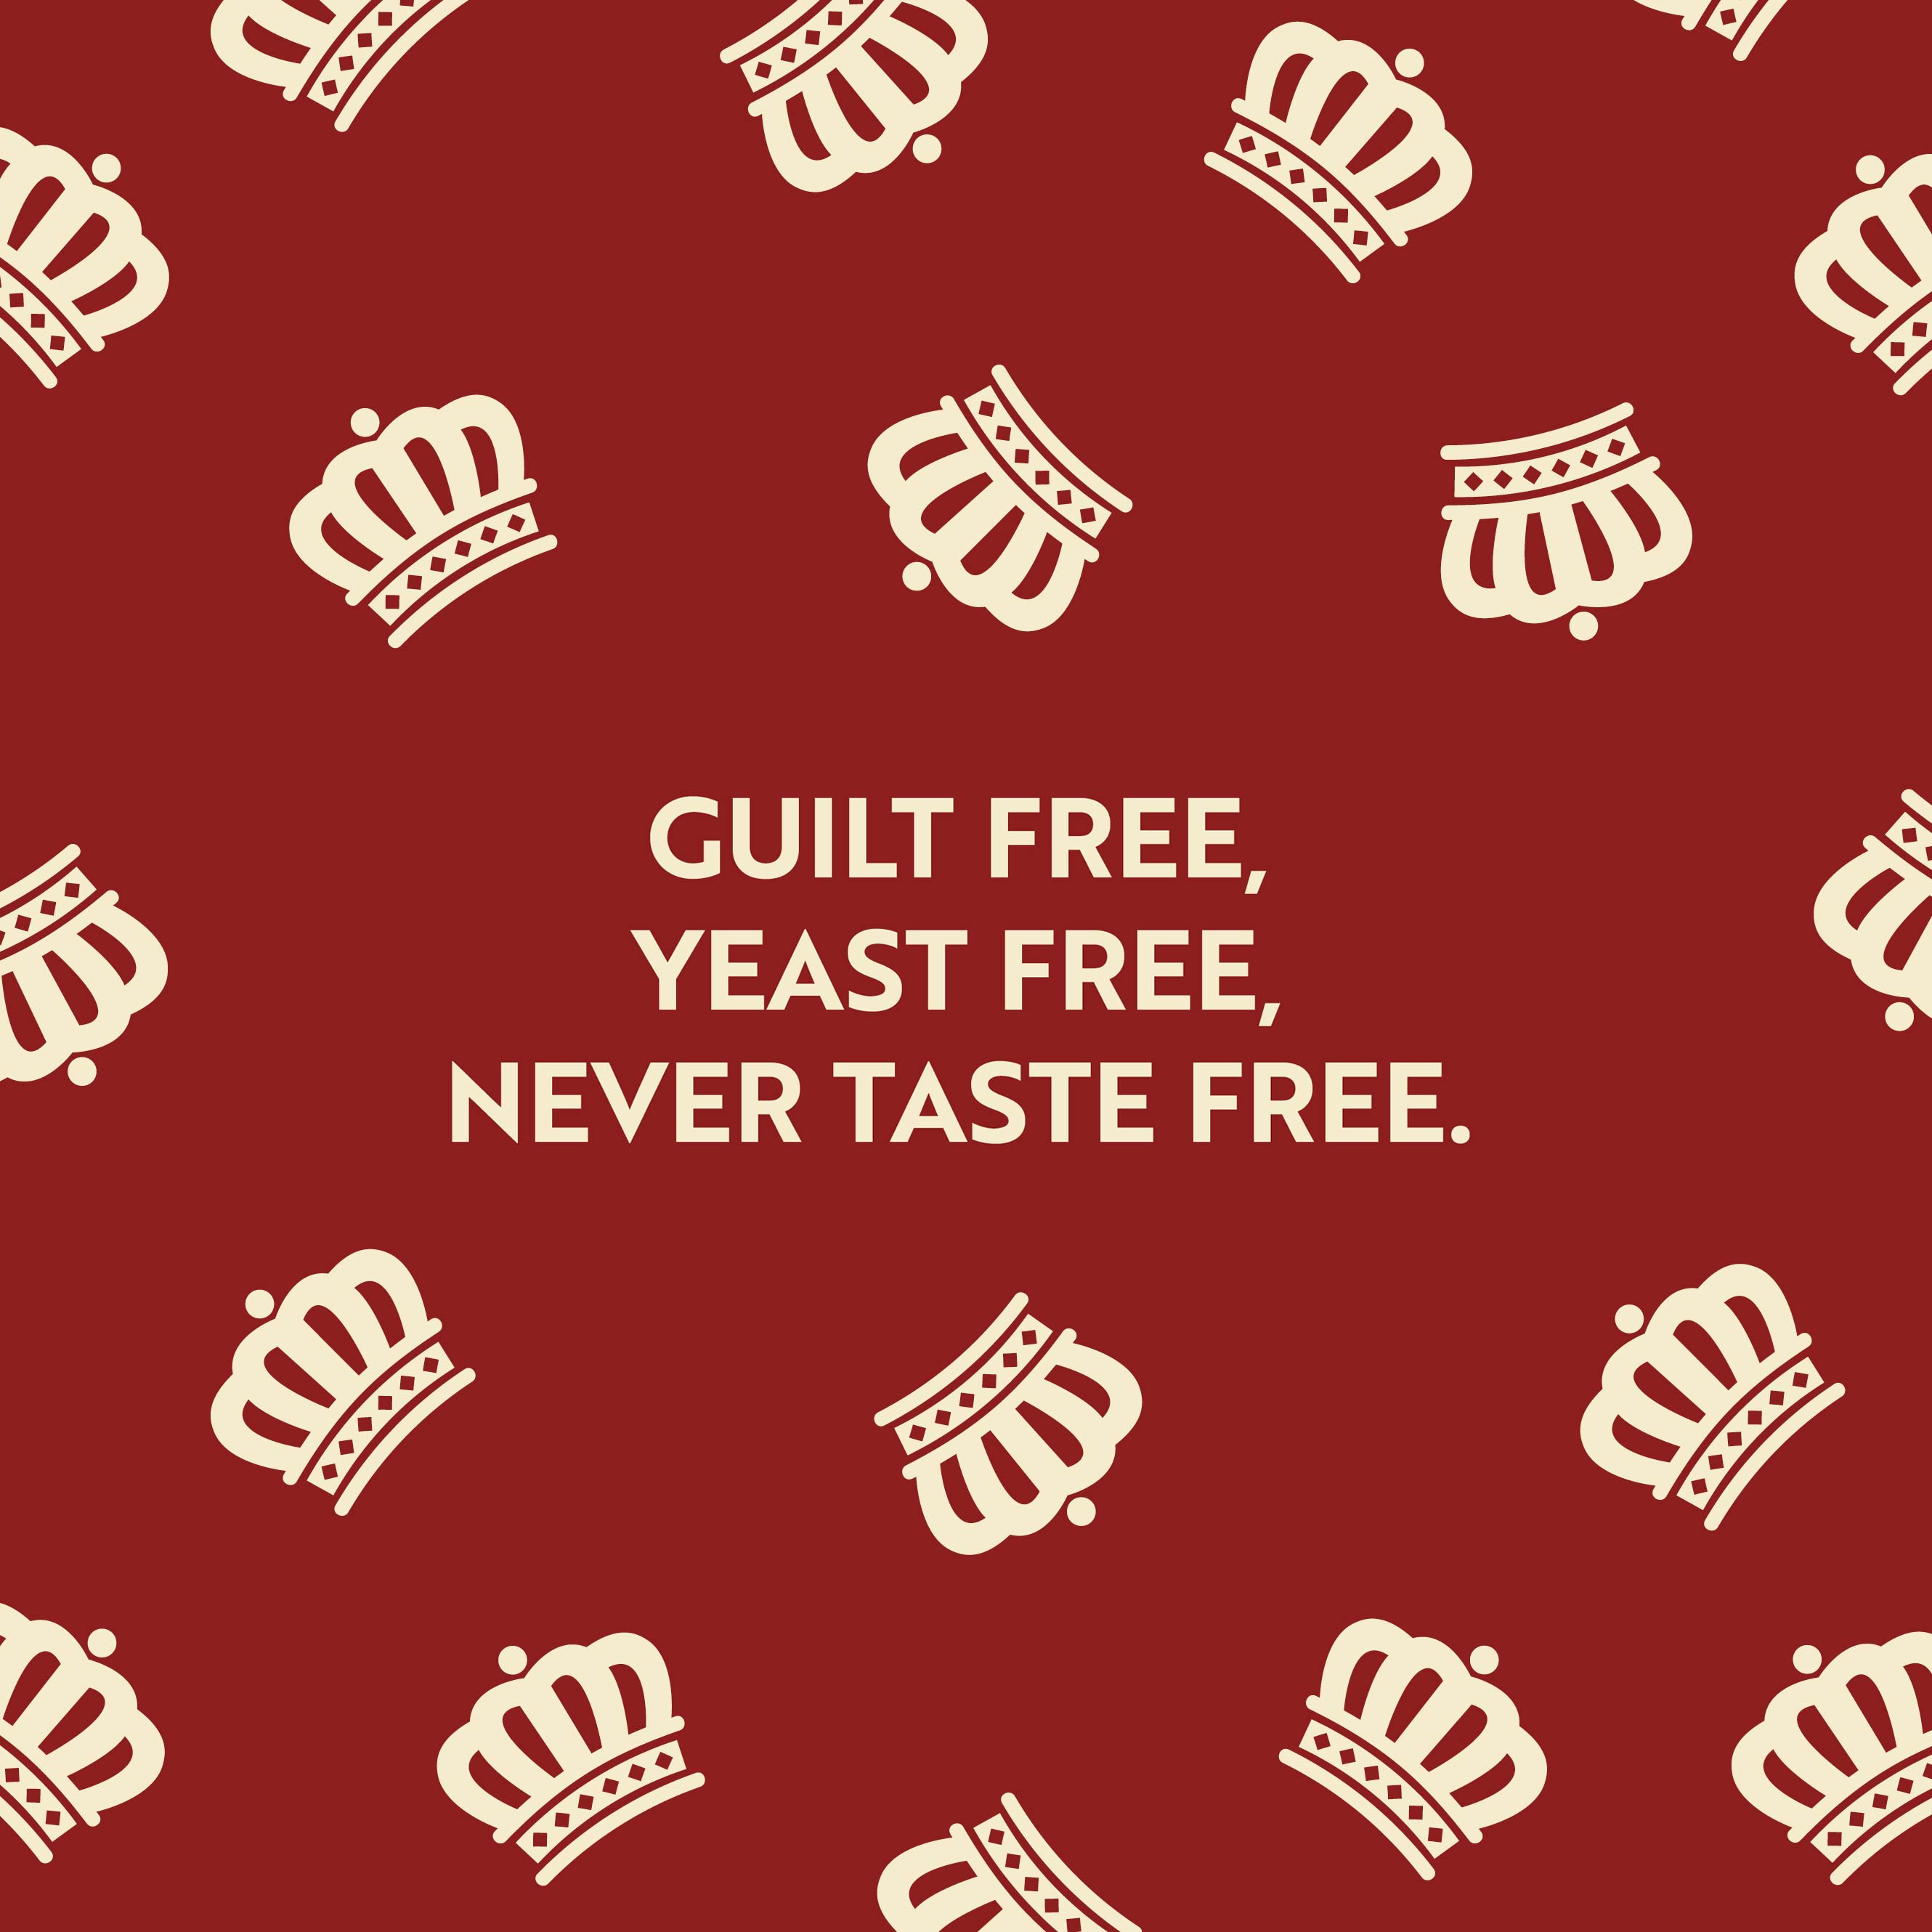 Guilt free, yeast free, never taste free